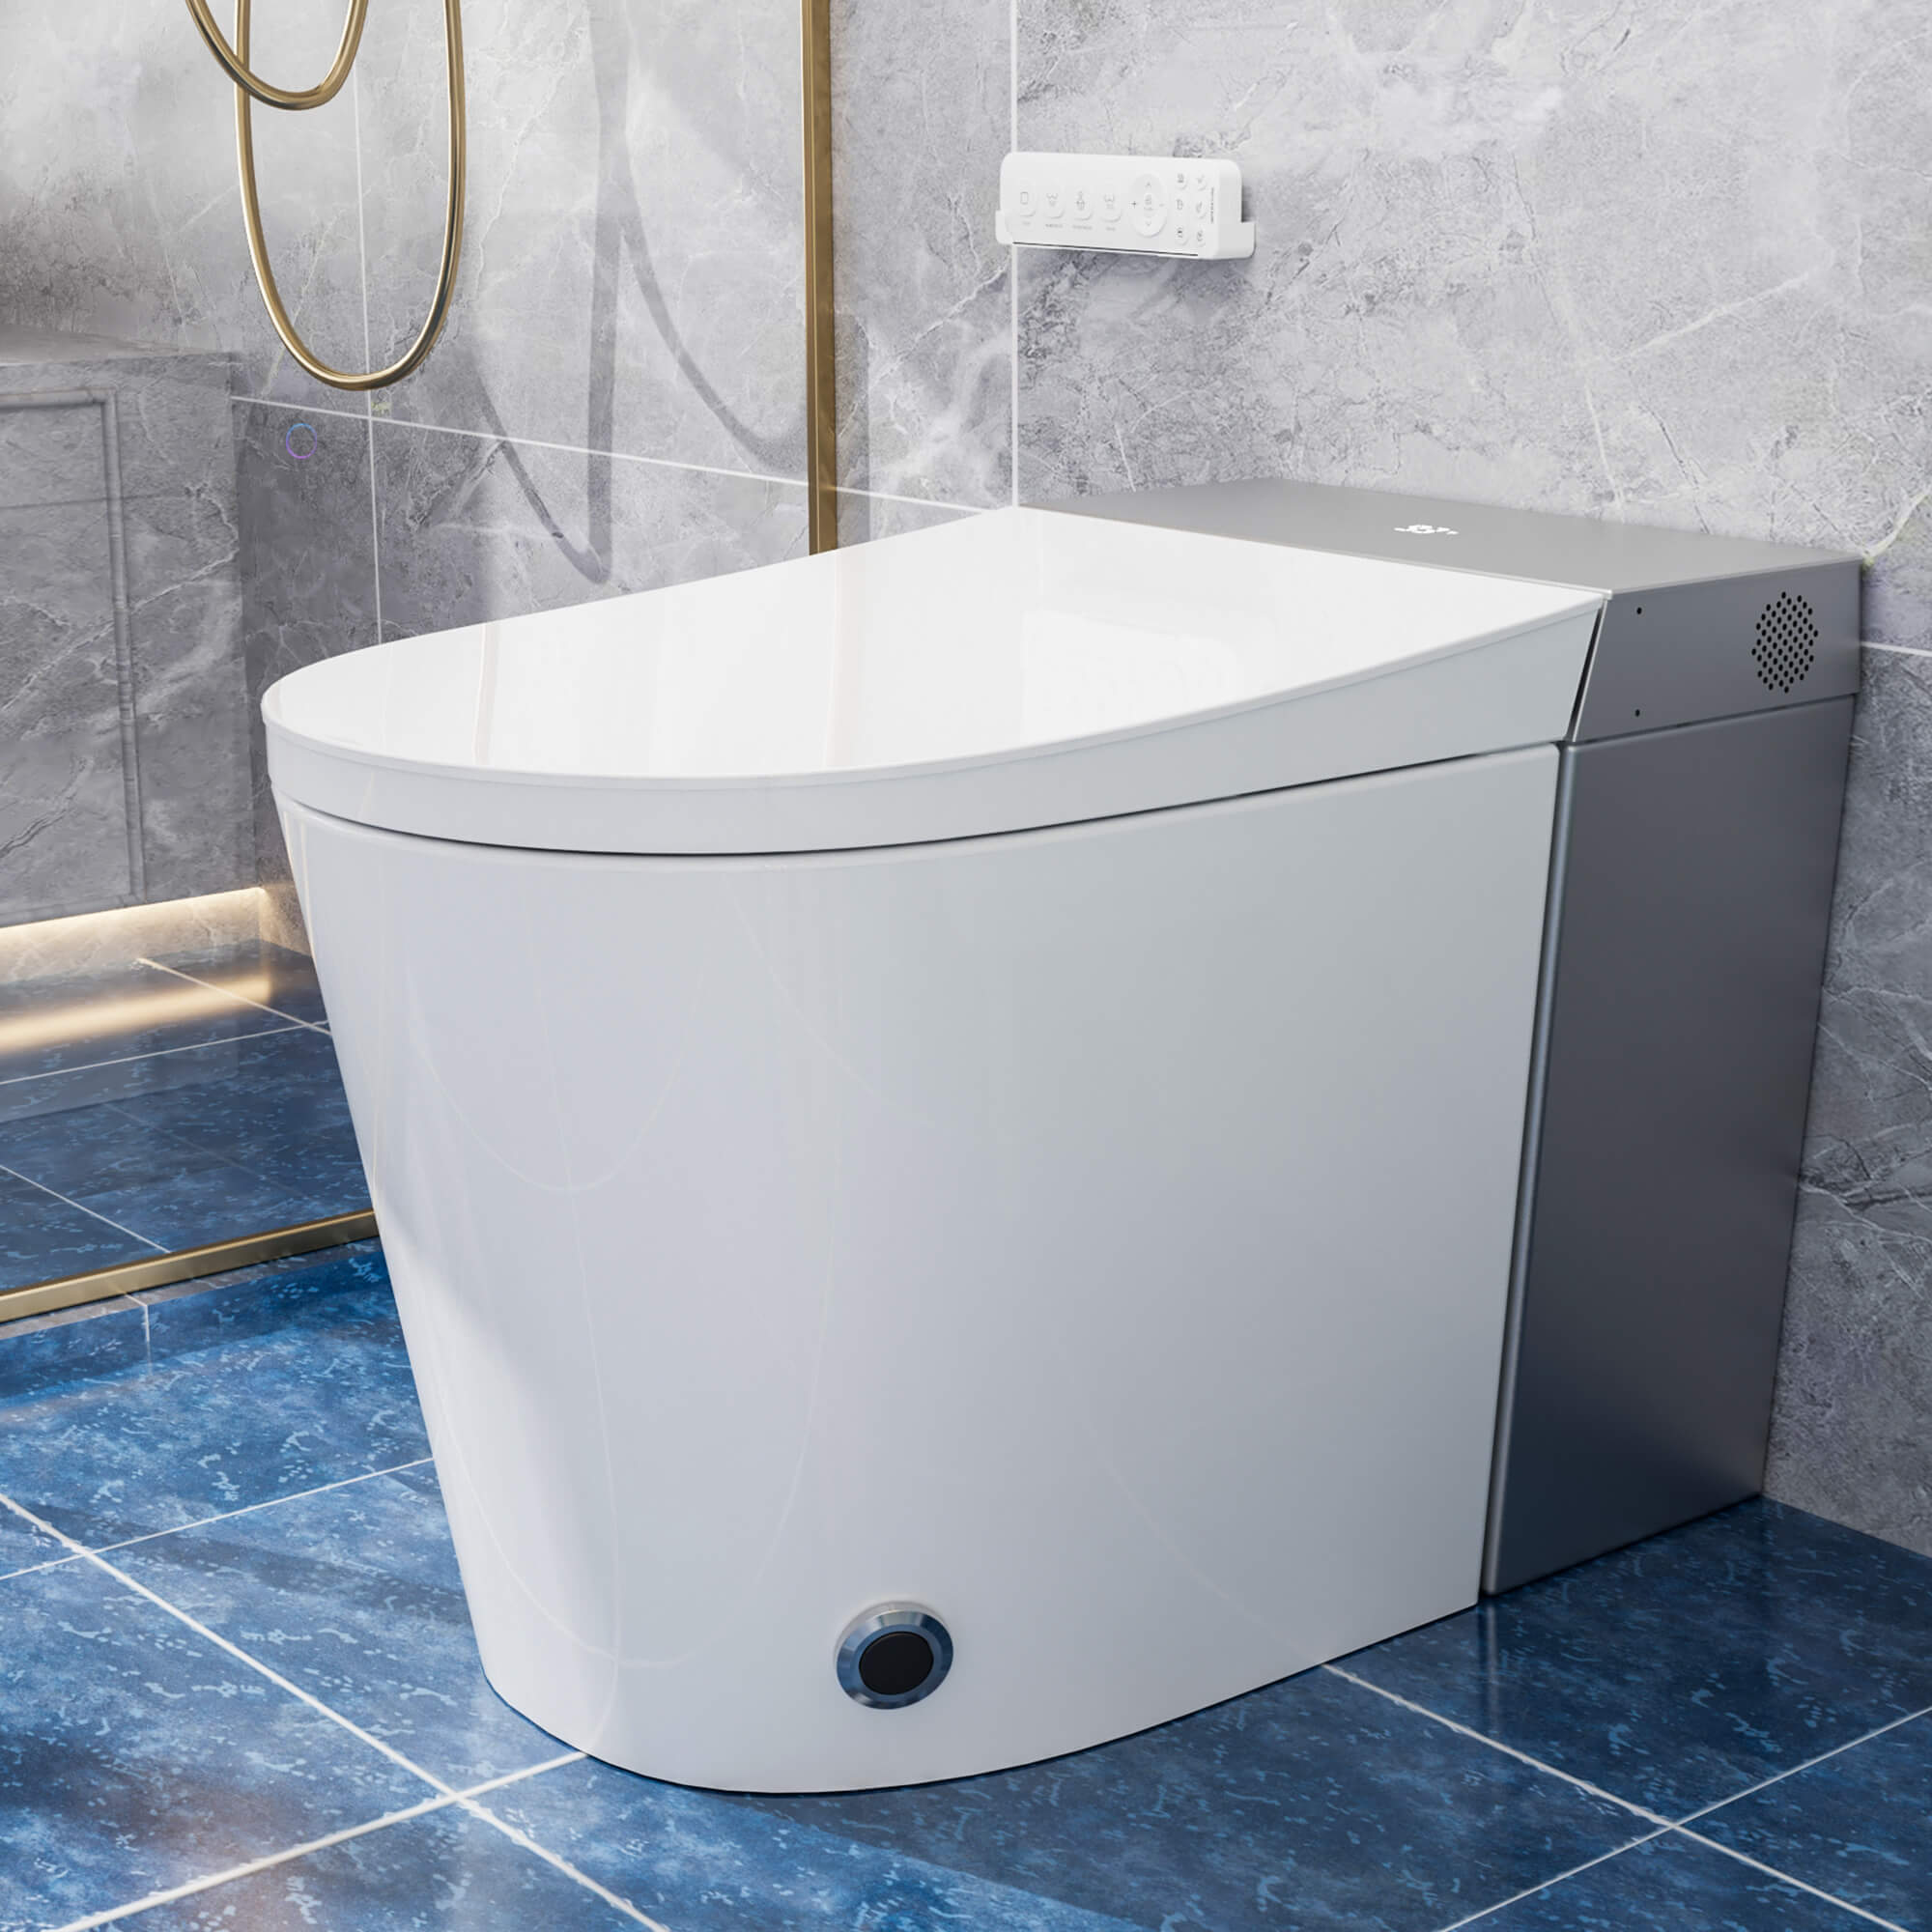 ARRISEA Smart Bidet Toilet Built-in Music and Heat Bidet Seat CG750